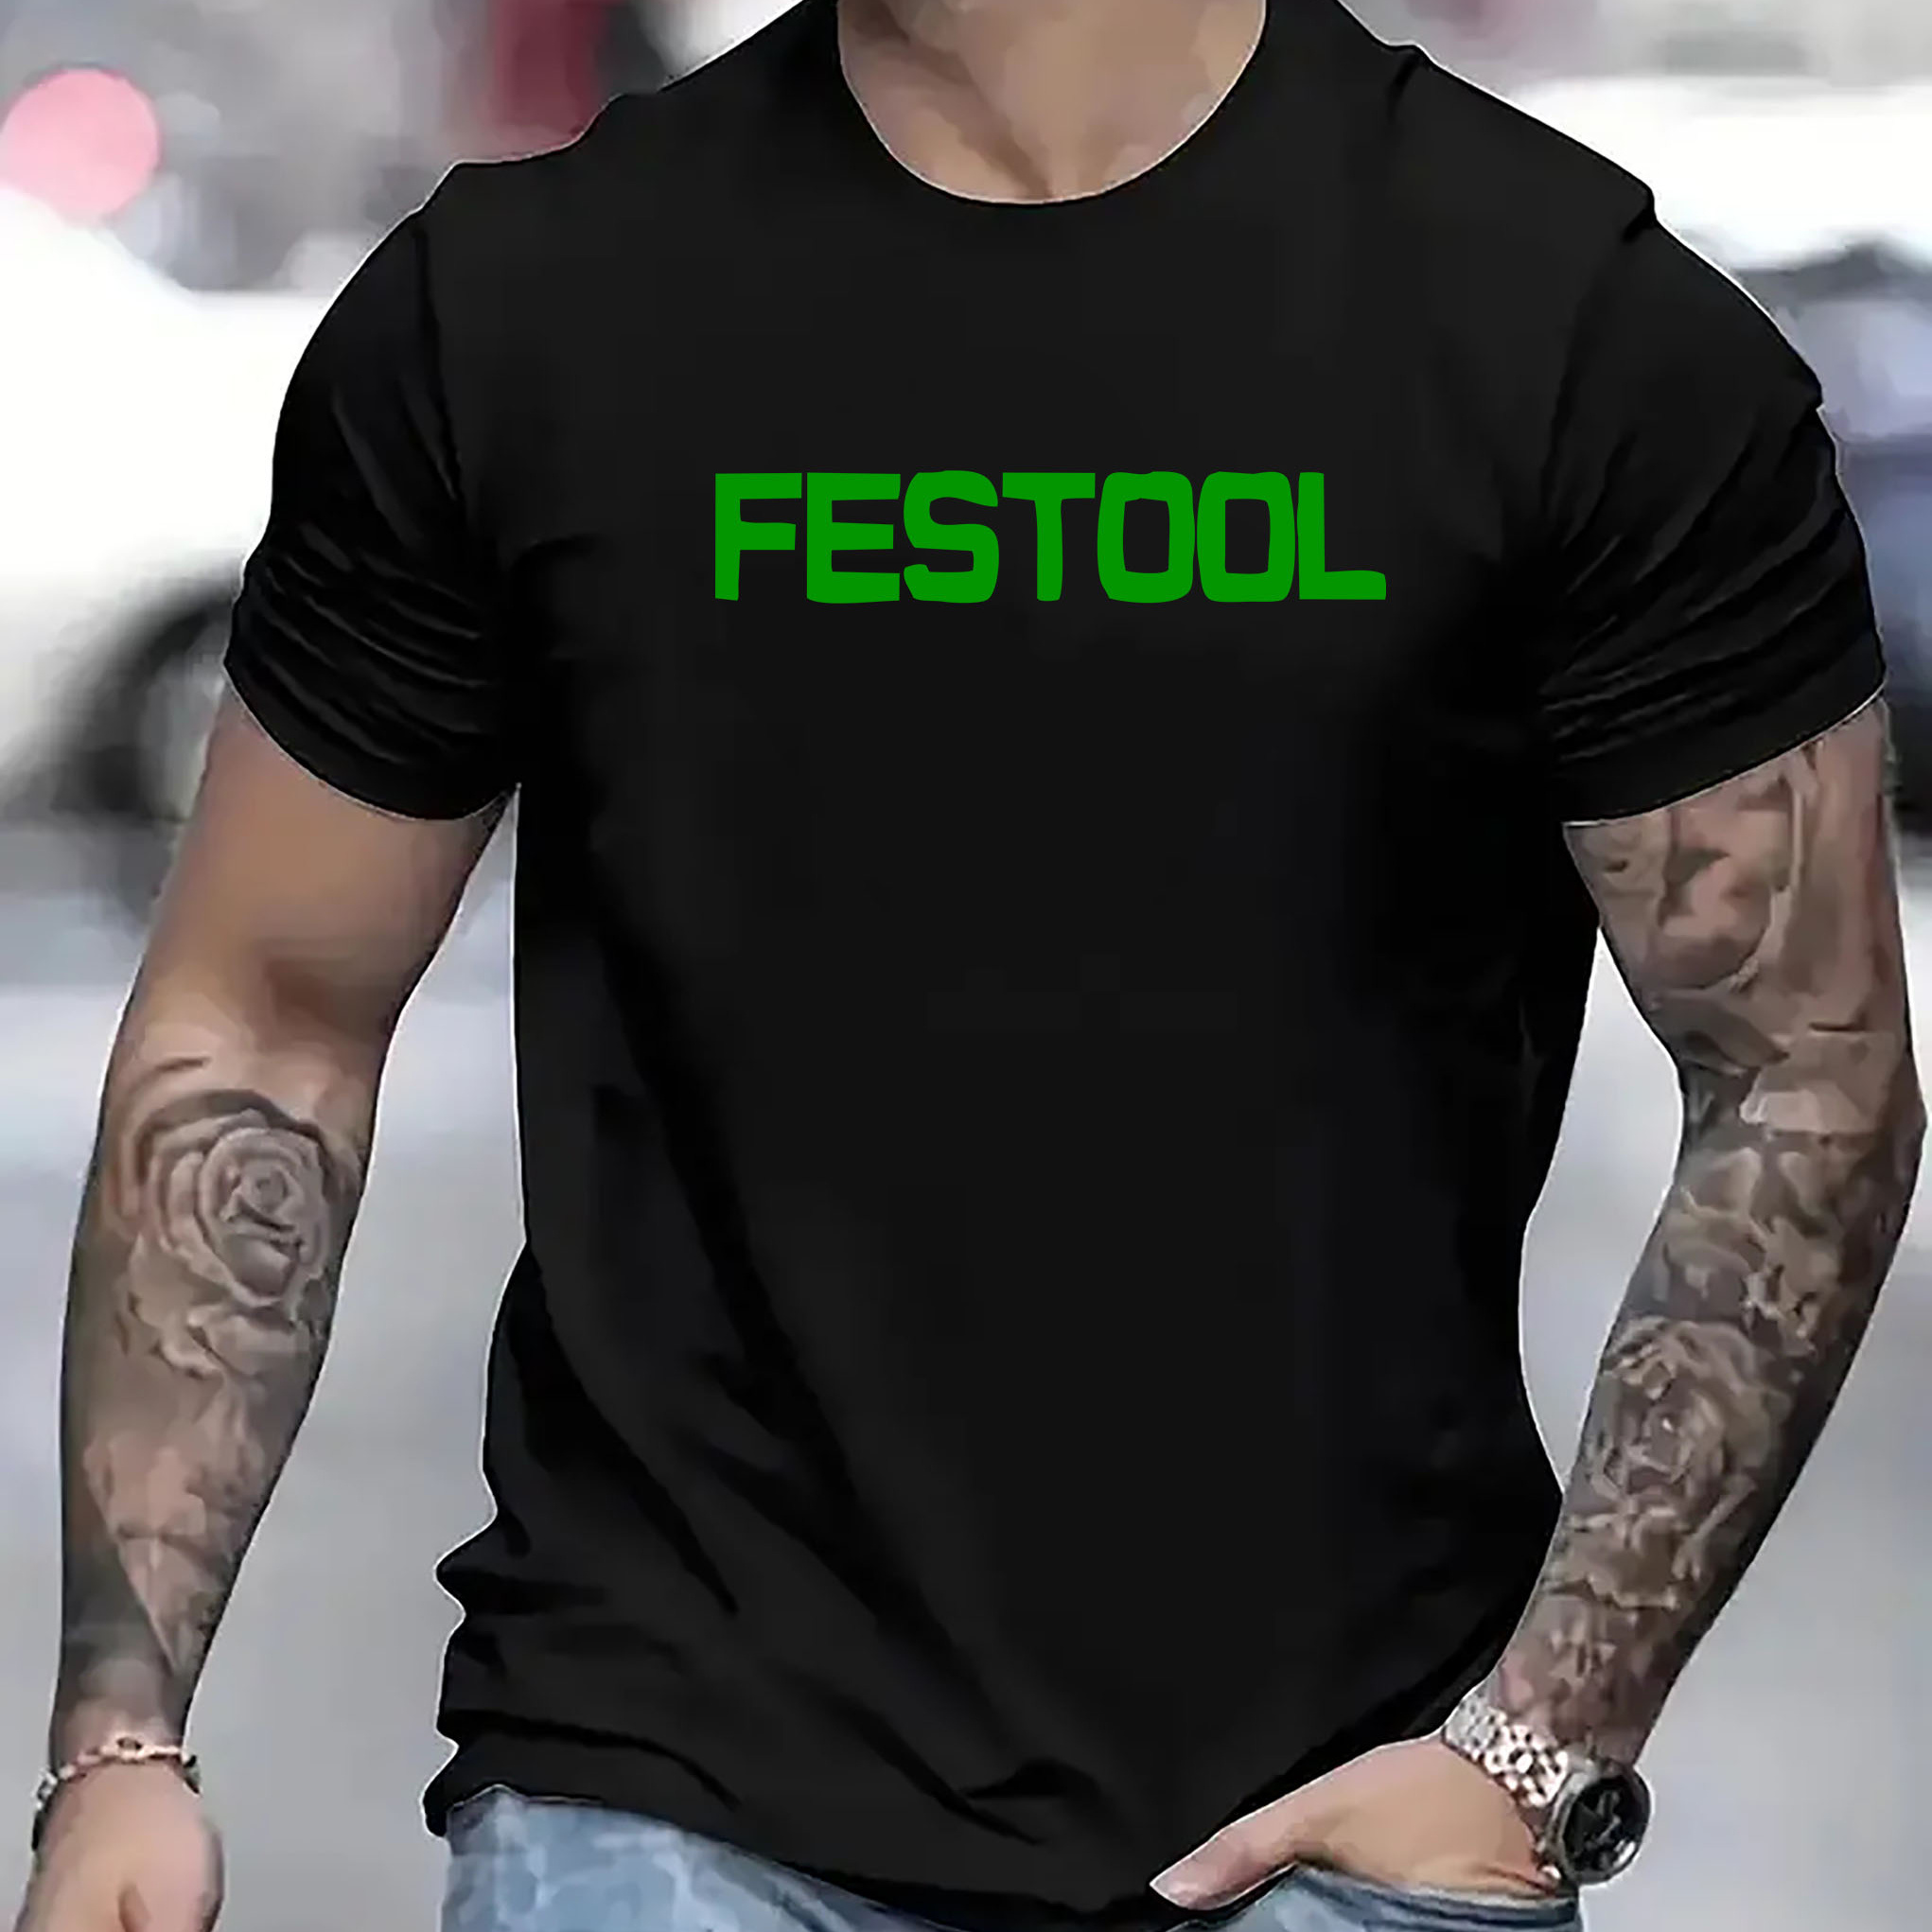 

Festool Letter Print Men's Crew Neck Short Sleeve Tees, Casual T-shirt, Summer Trendy Comfortable Lightweight Top For Outdoor Sports